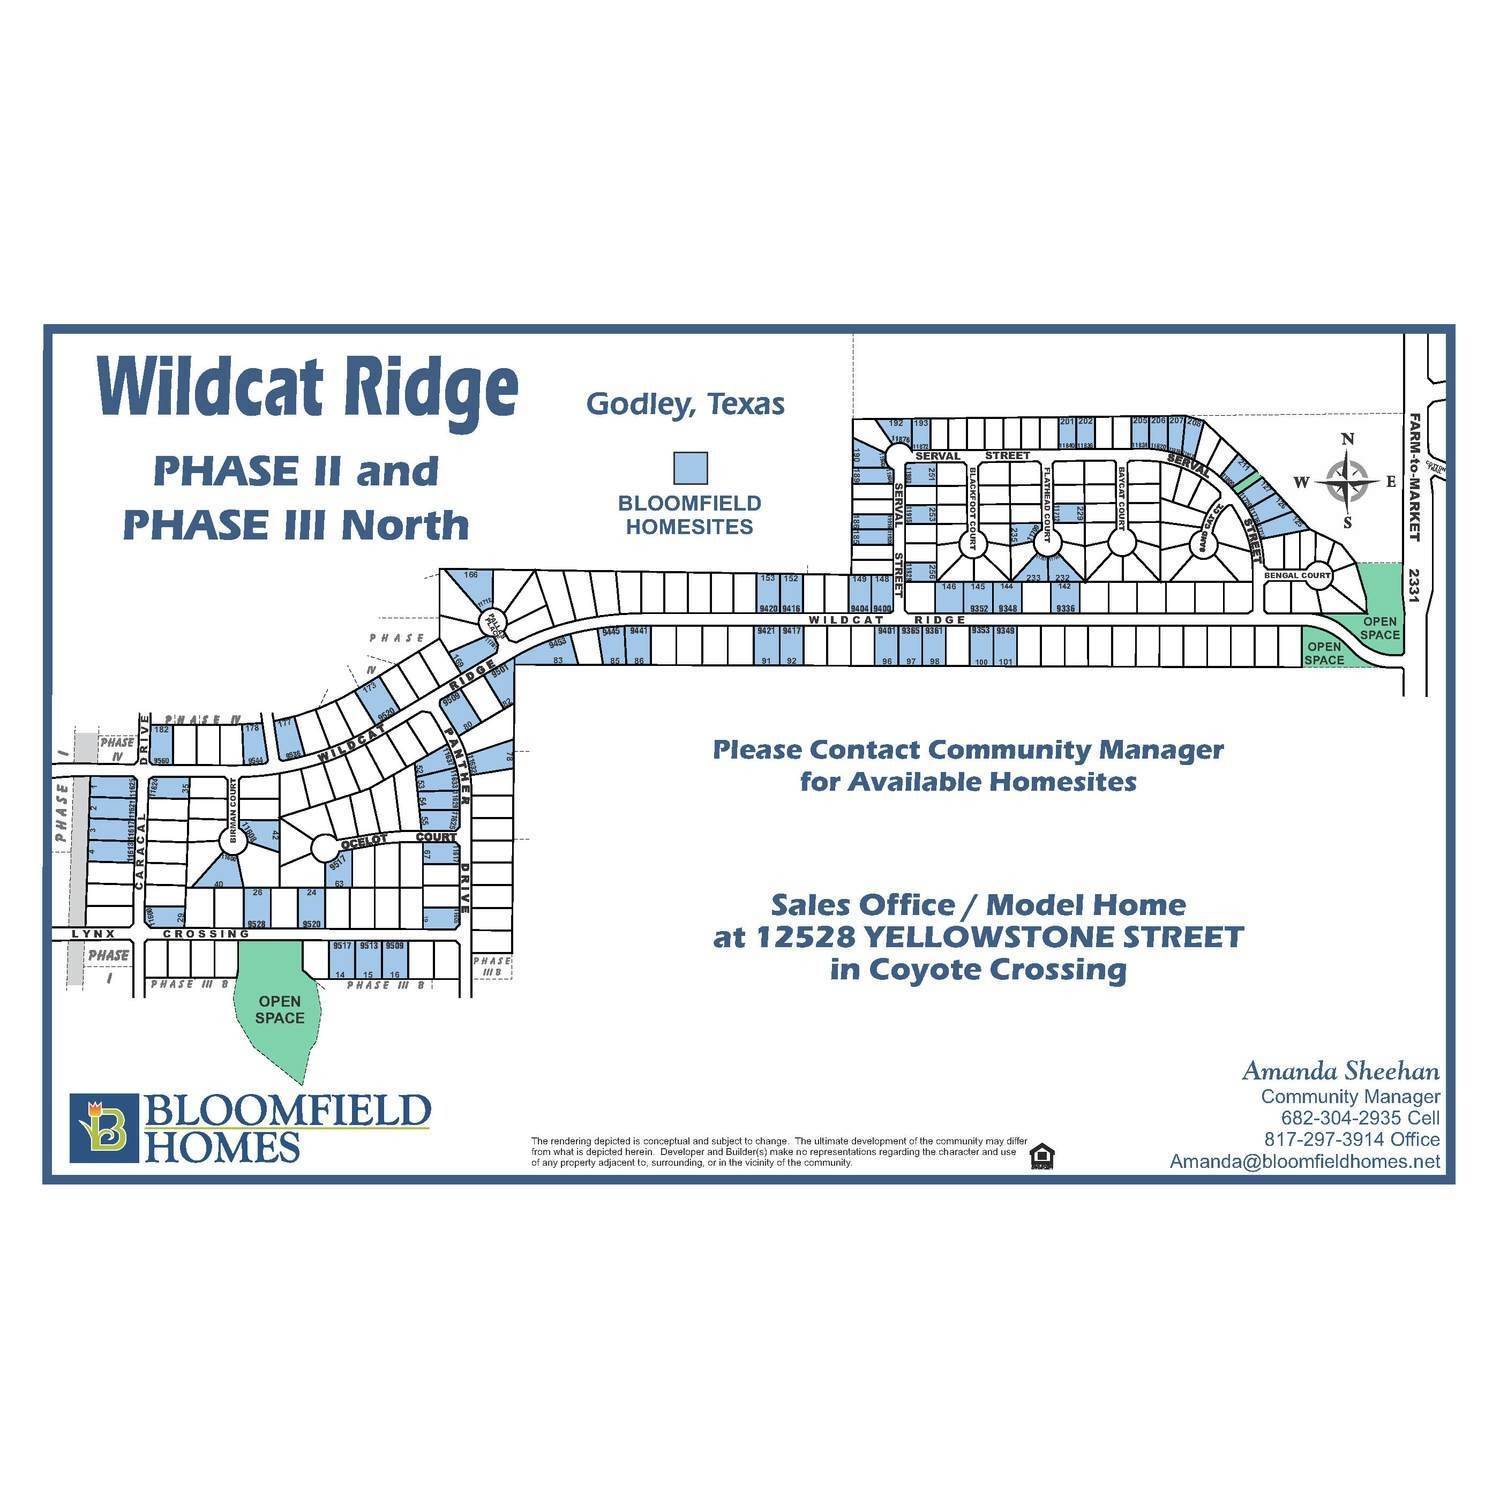 Wildcat Ridge xây dựng tại 12528 Yellowstone Street, Godley, TX 76044